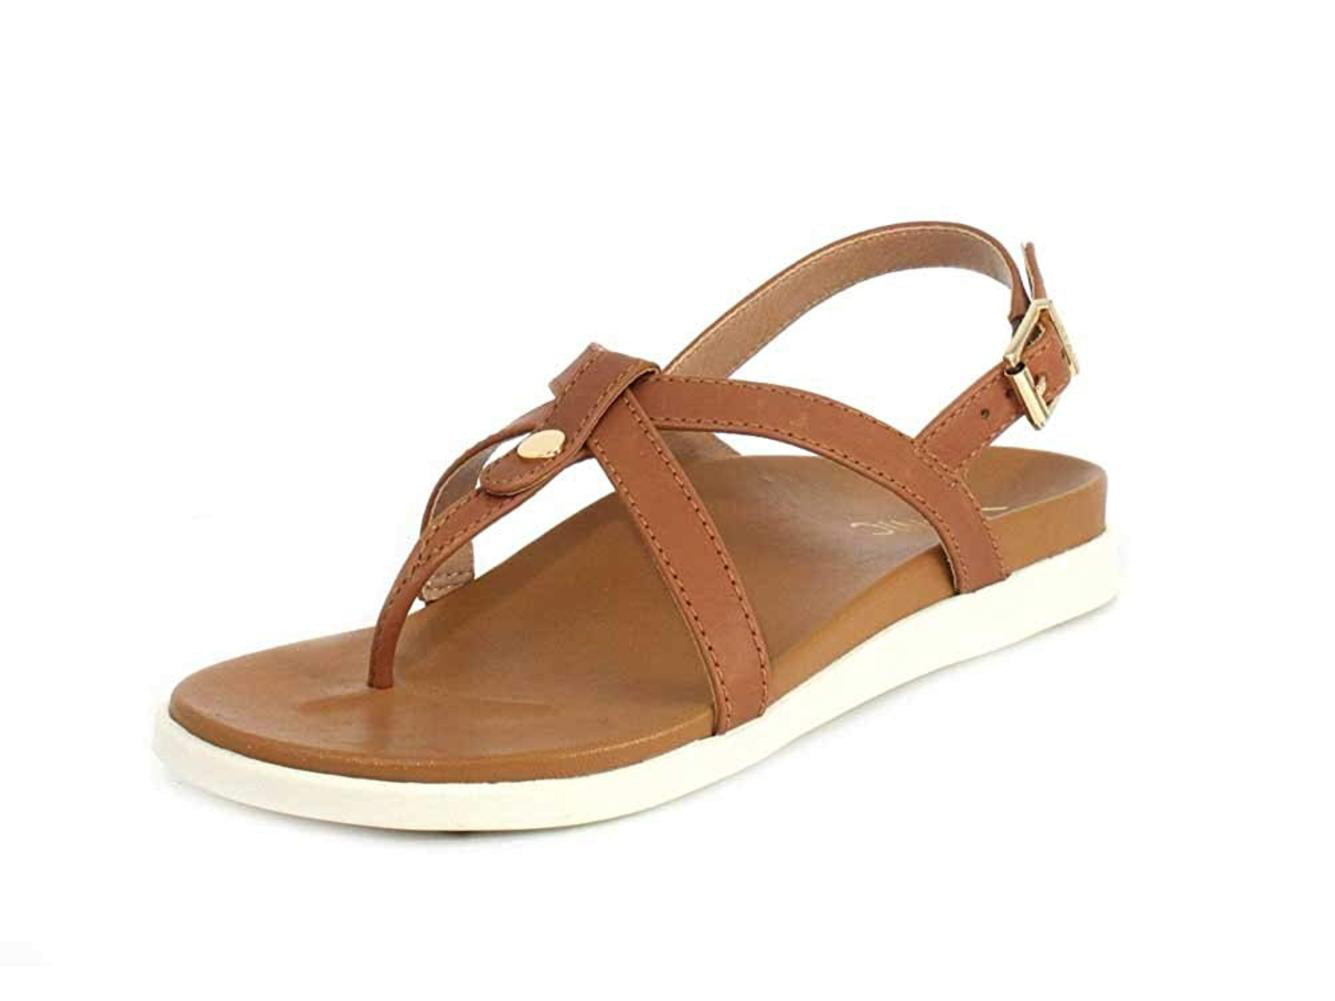 Vionic - Vionic Women's, Veranda Sandals, Tan, Size 7.0 - Walmart.com ...